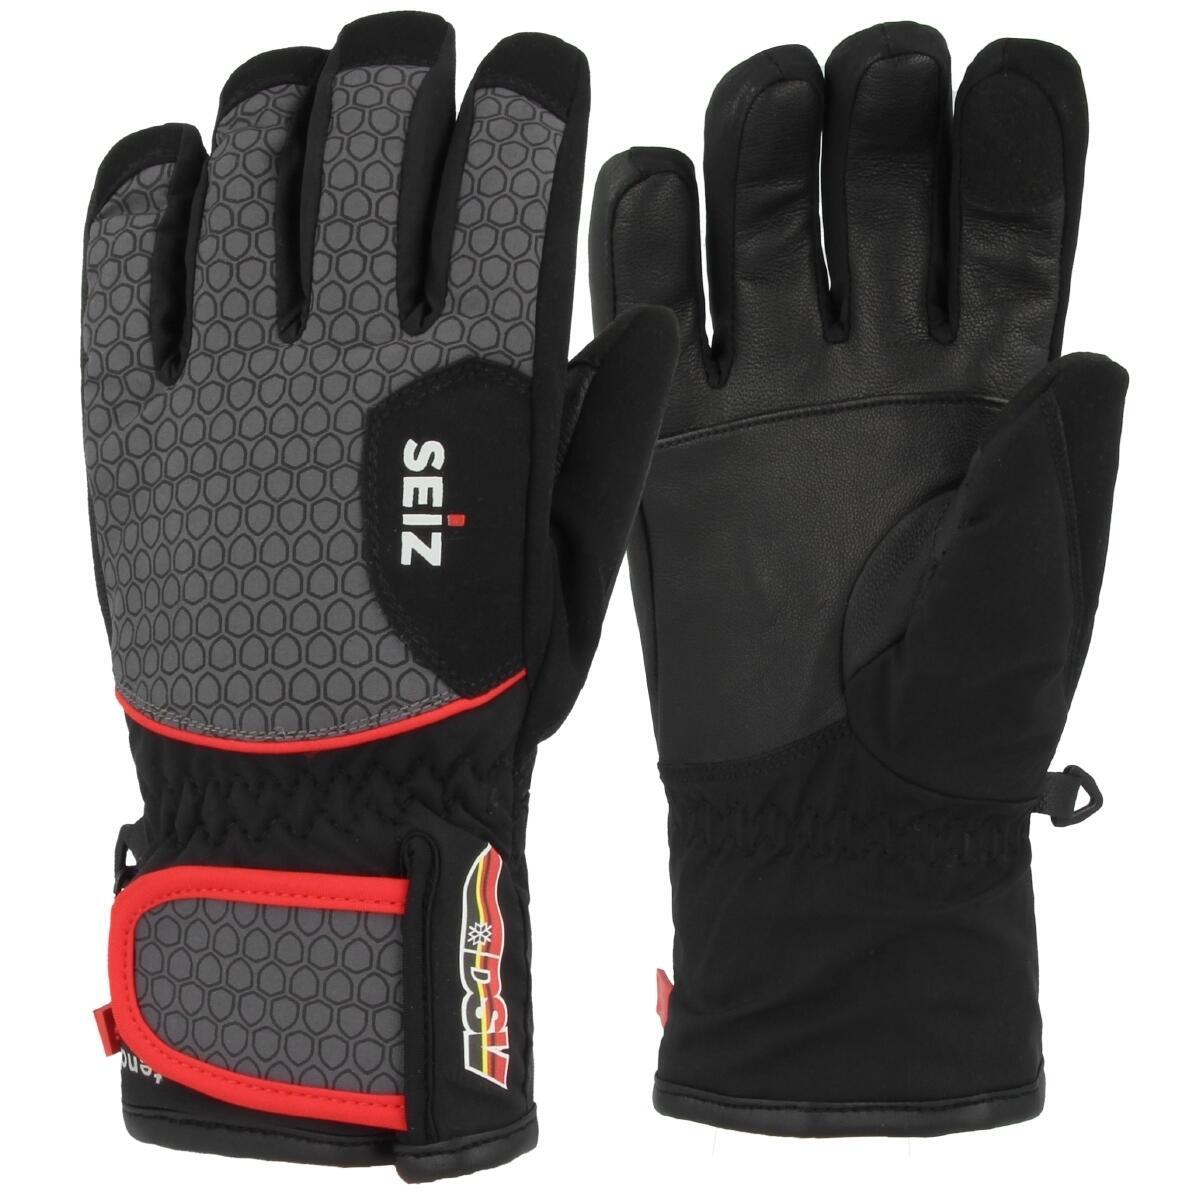 Перчатки Seiz Tender Unisex Adult, черный перчатки tender размер 7 5 черный